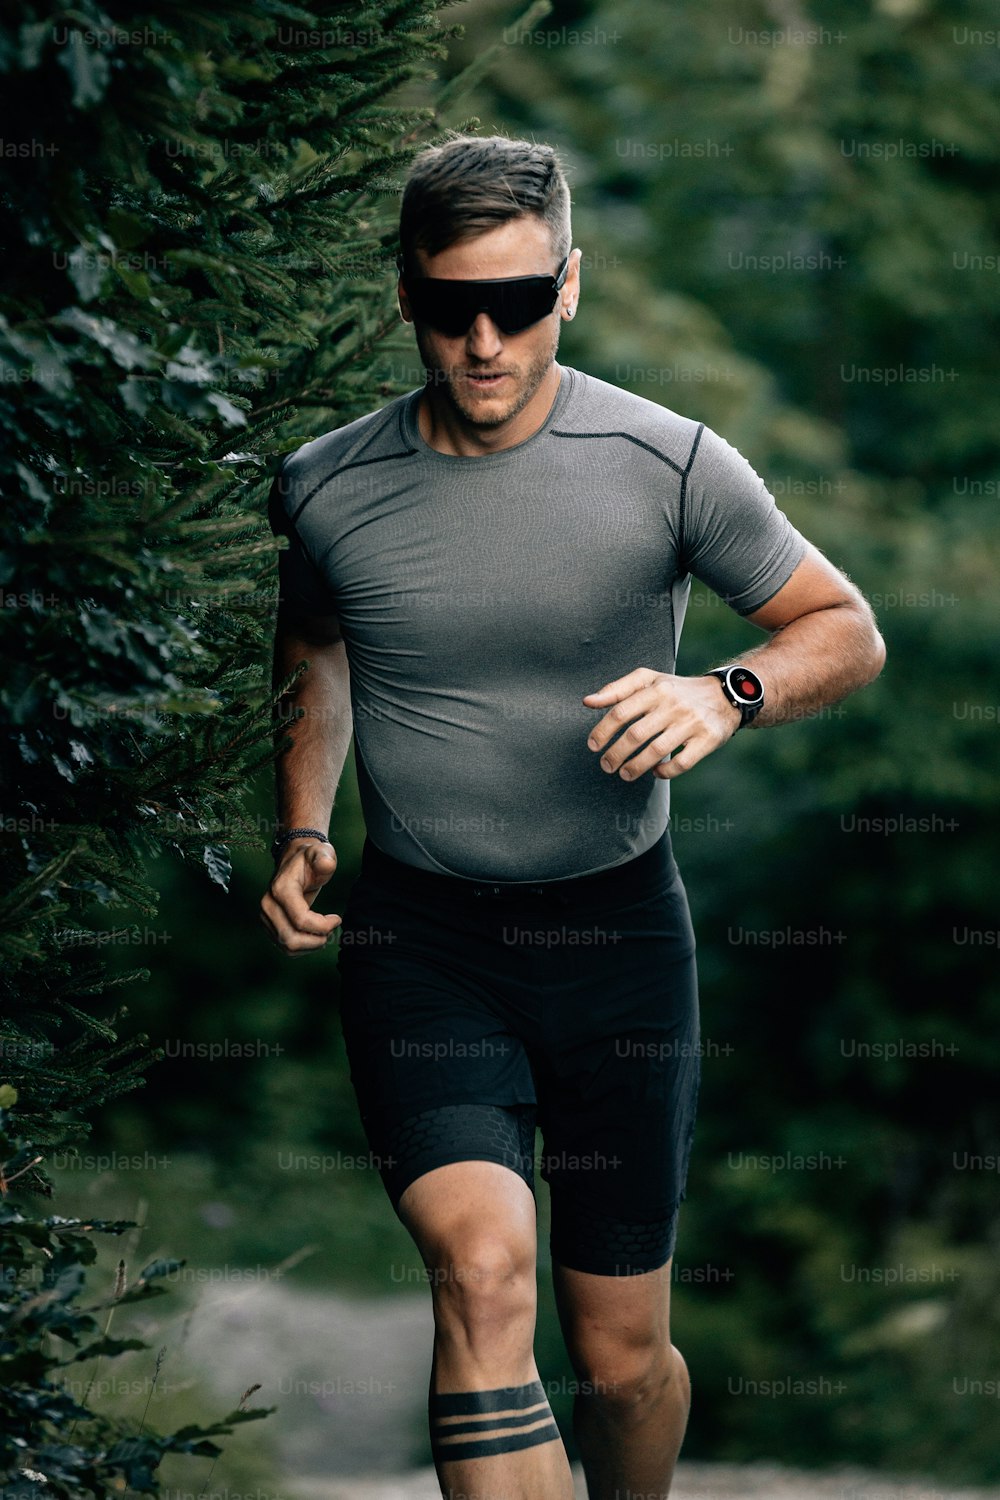 a man in a gray shirt and black shorts running